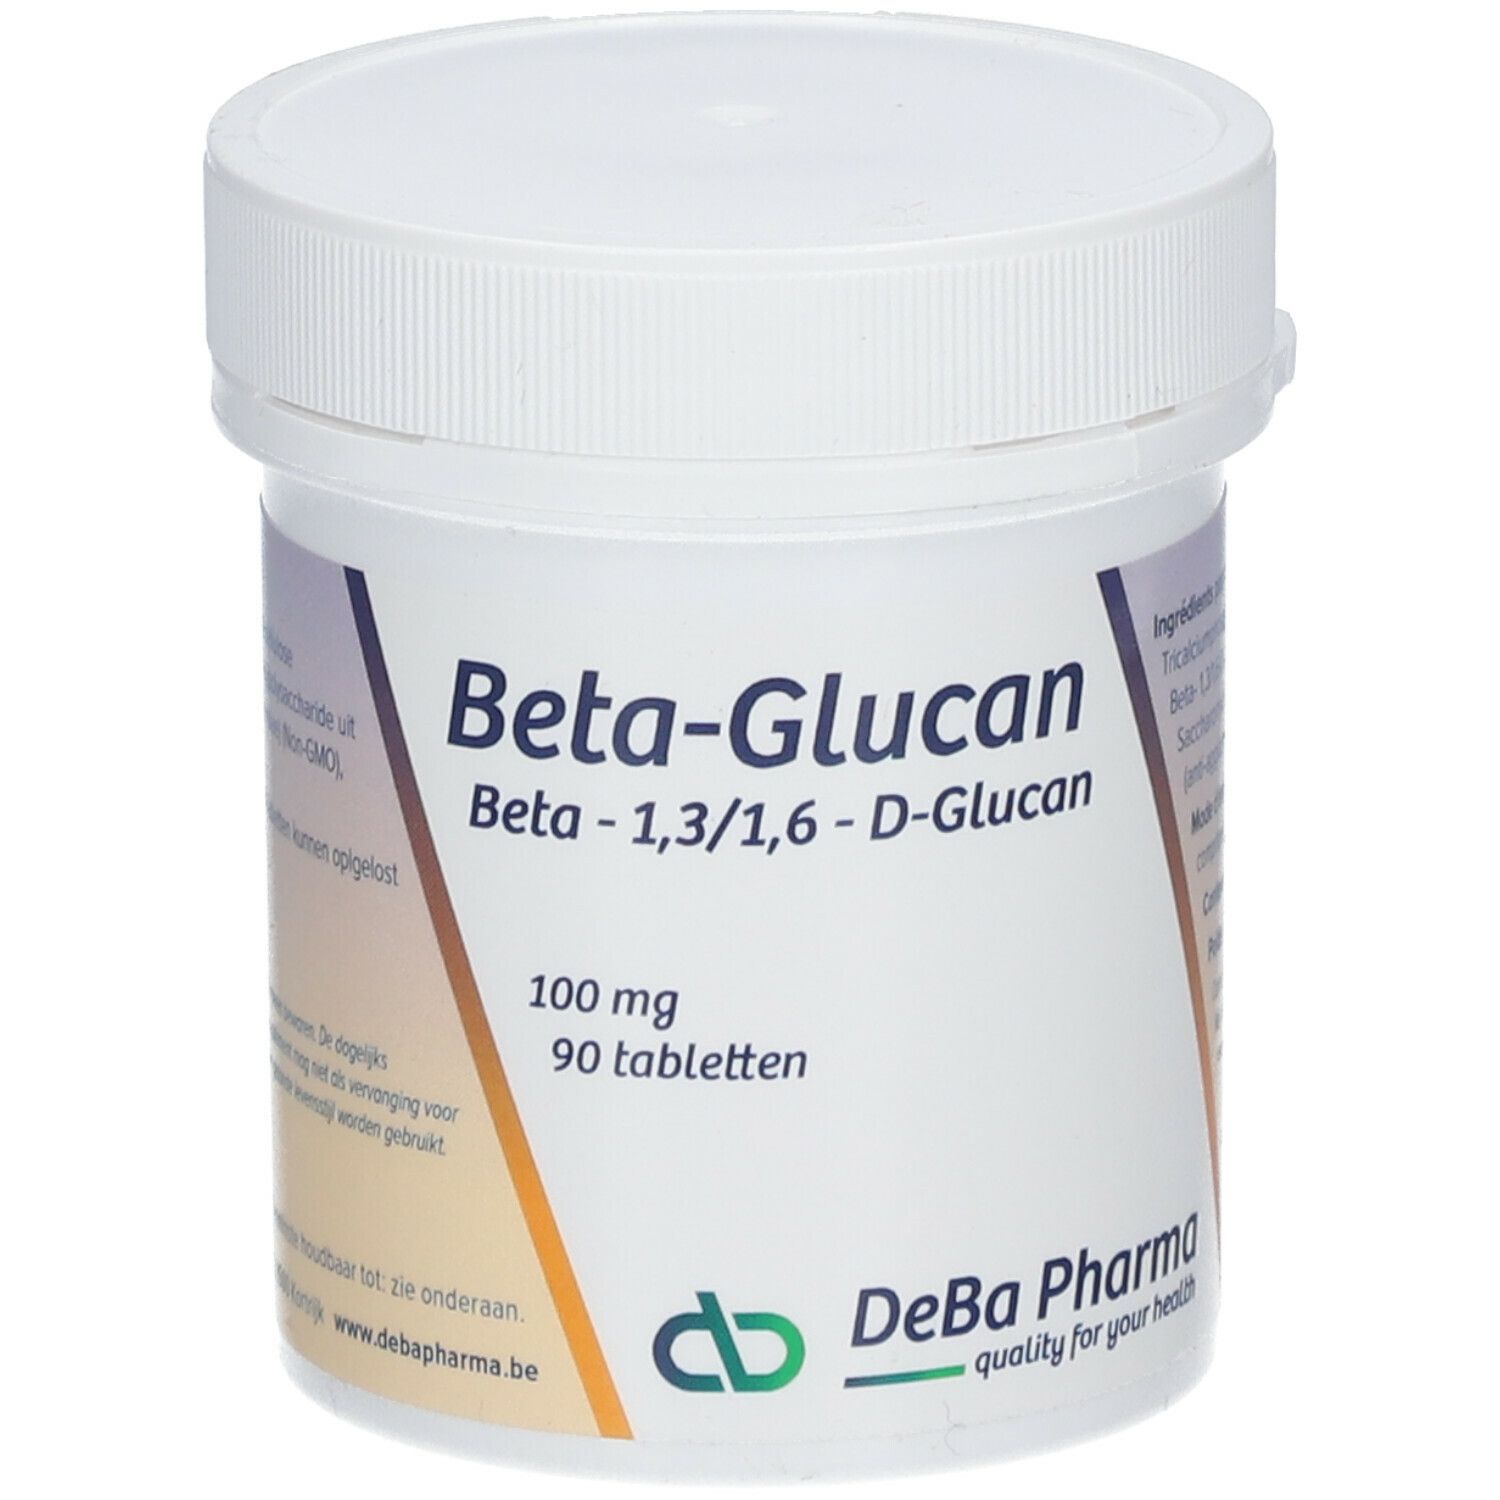 Deba Beta-Glucan